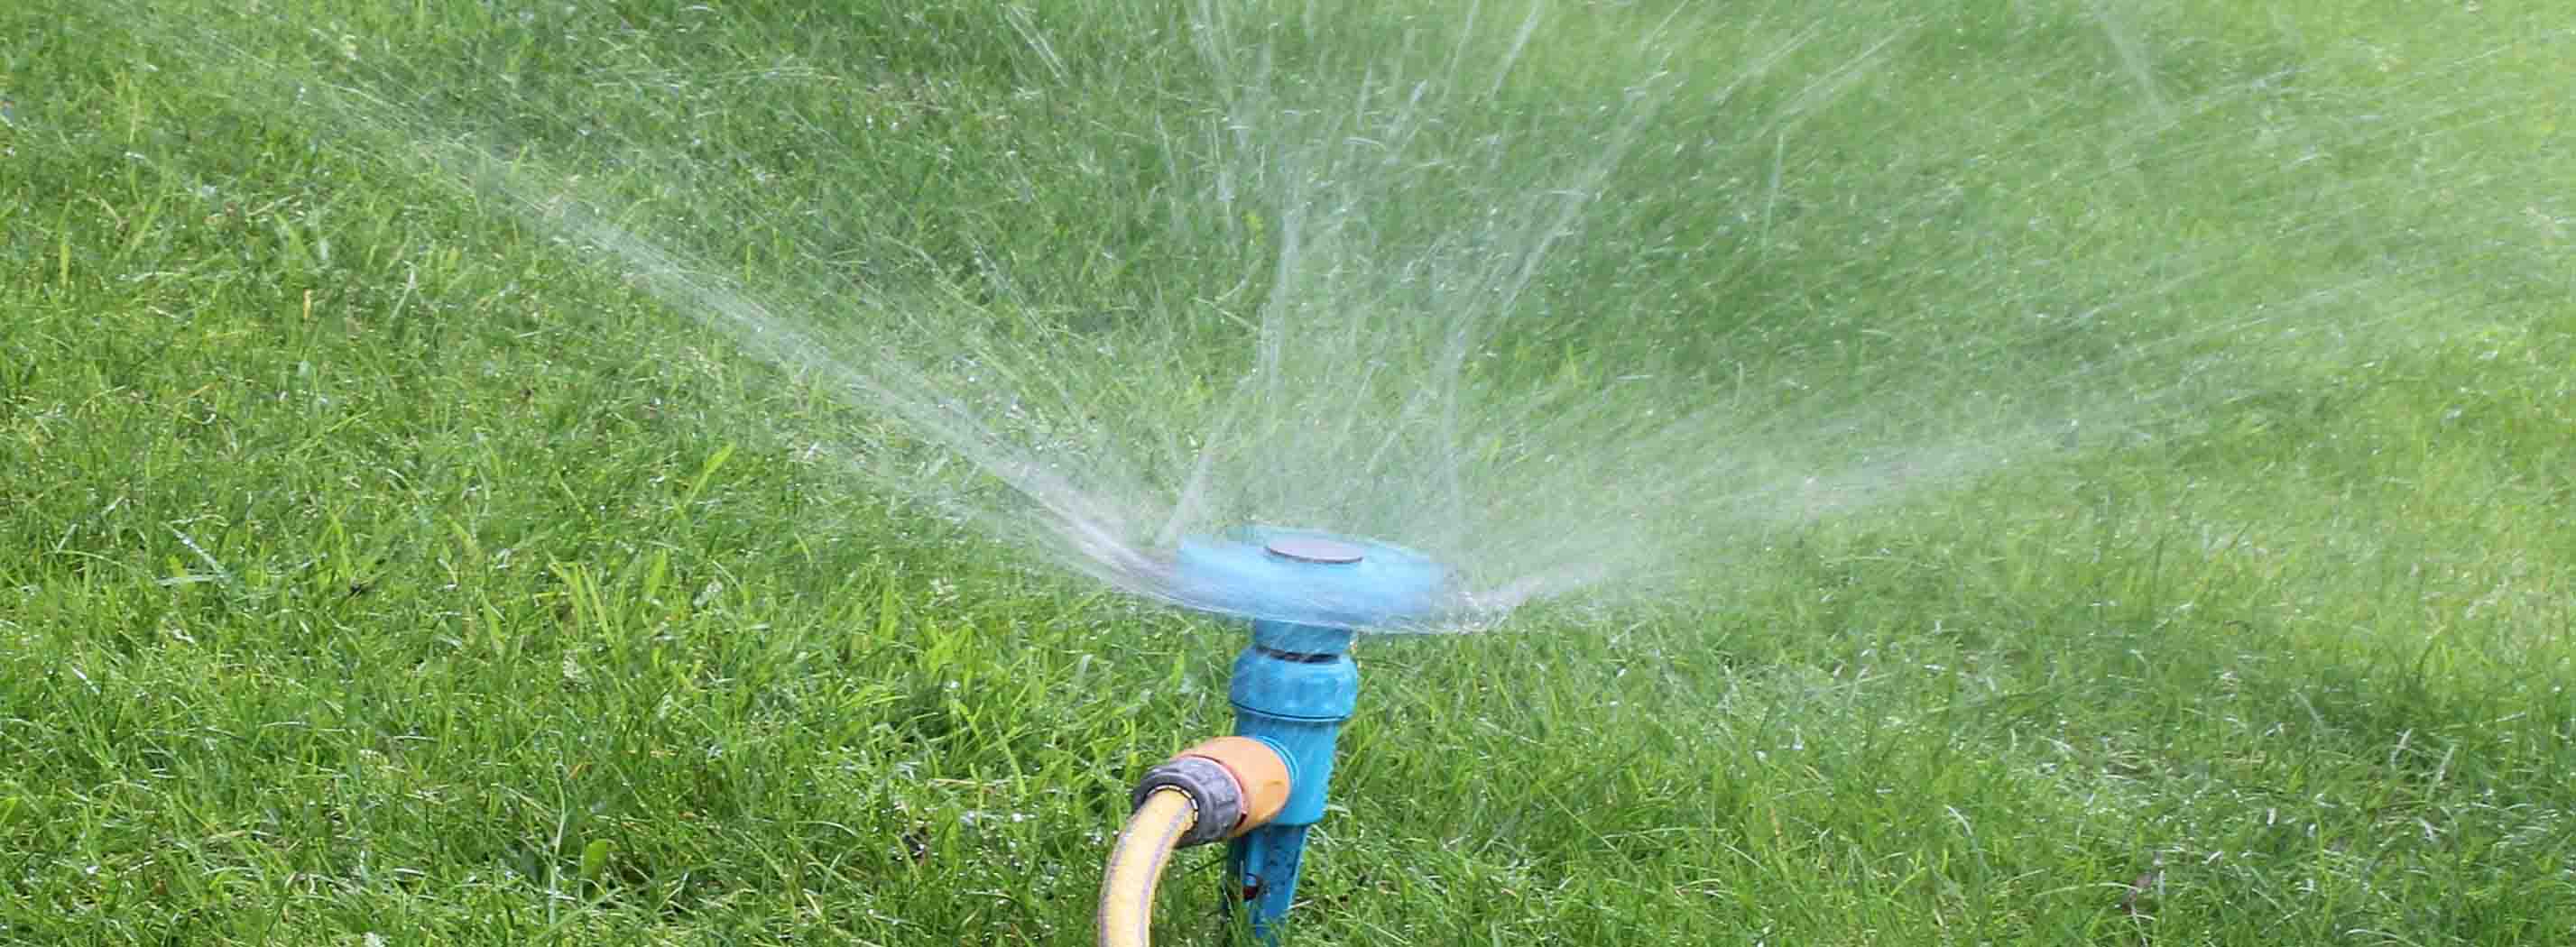 use a soaker hose in heat waves